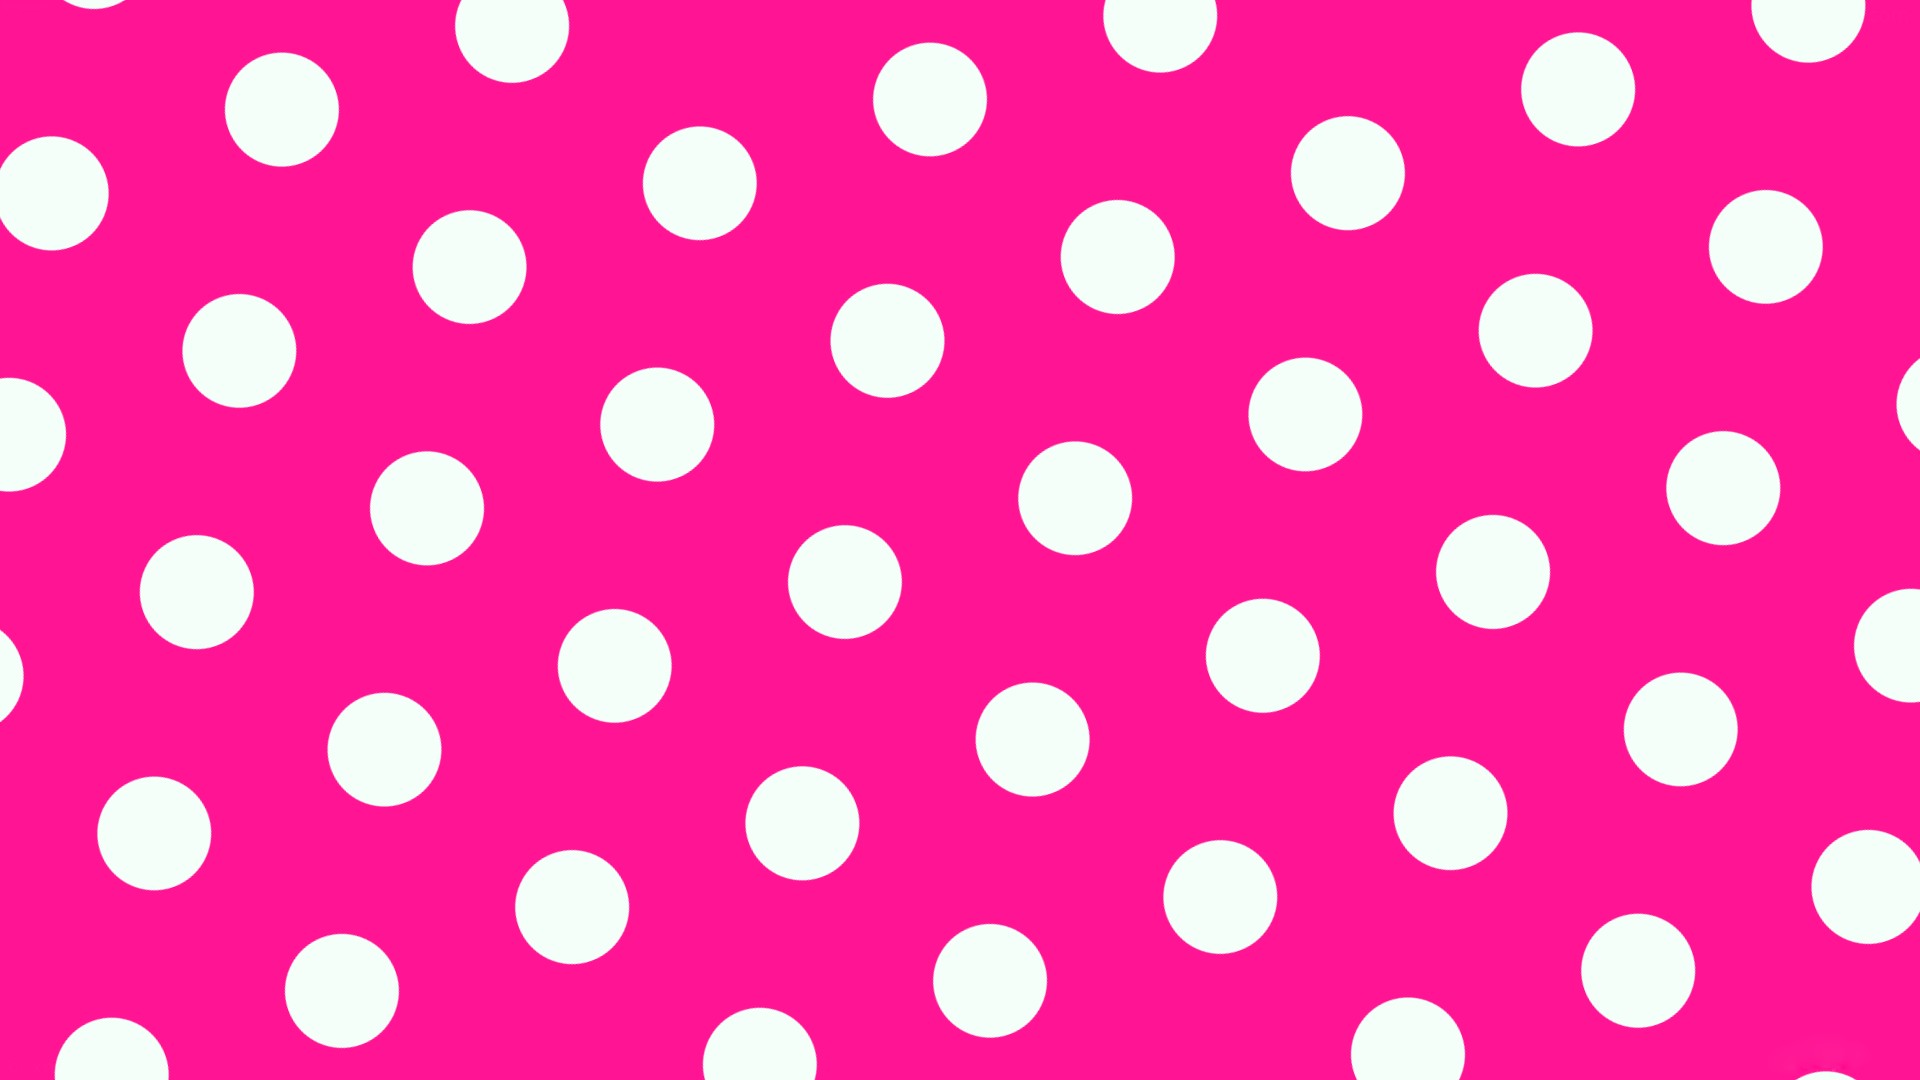 Polka Dot wallpaper ·① Download free cool High Resolution wallpapers